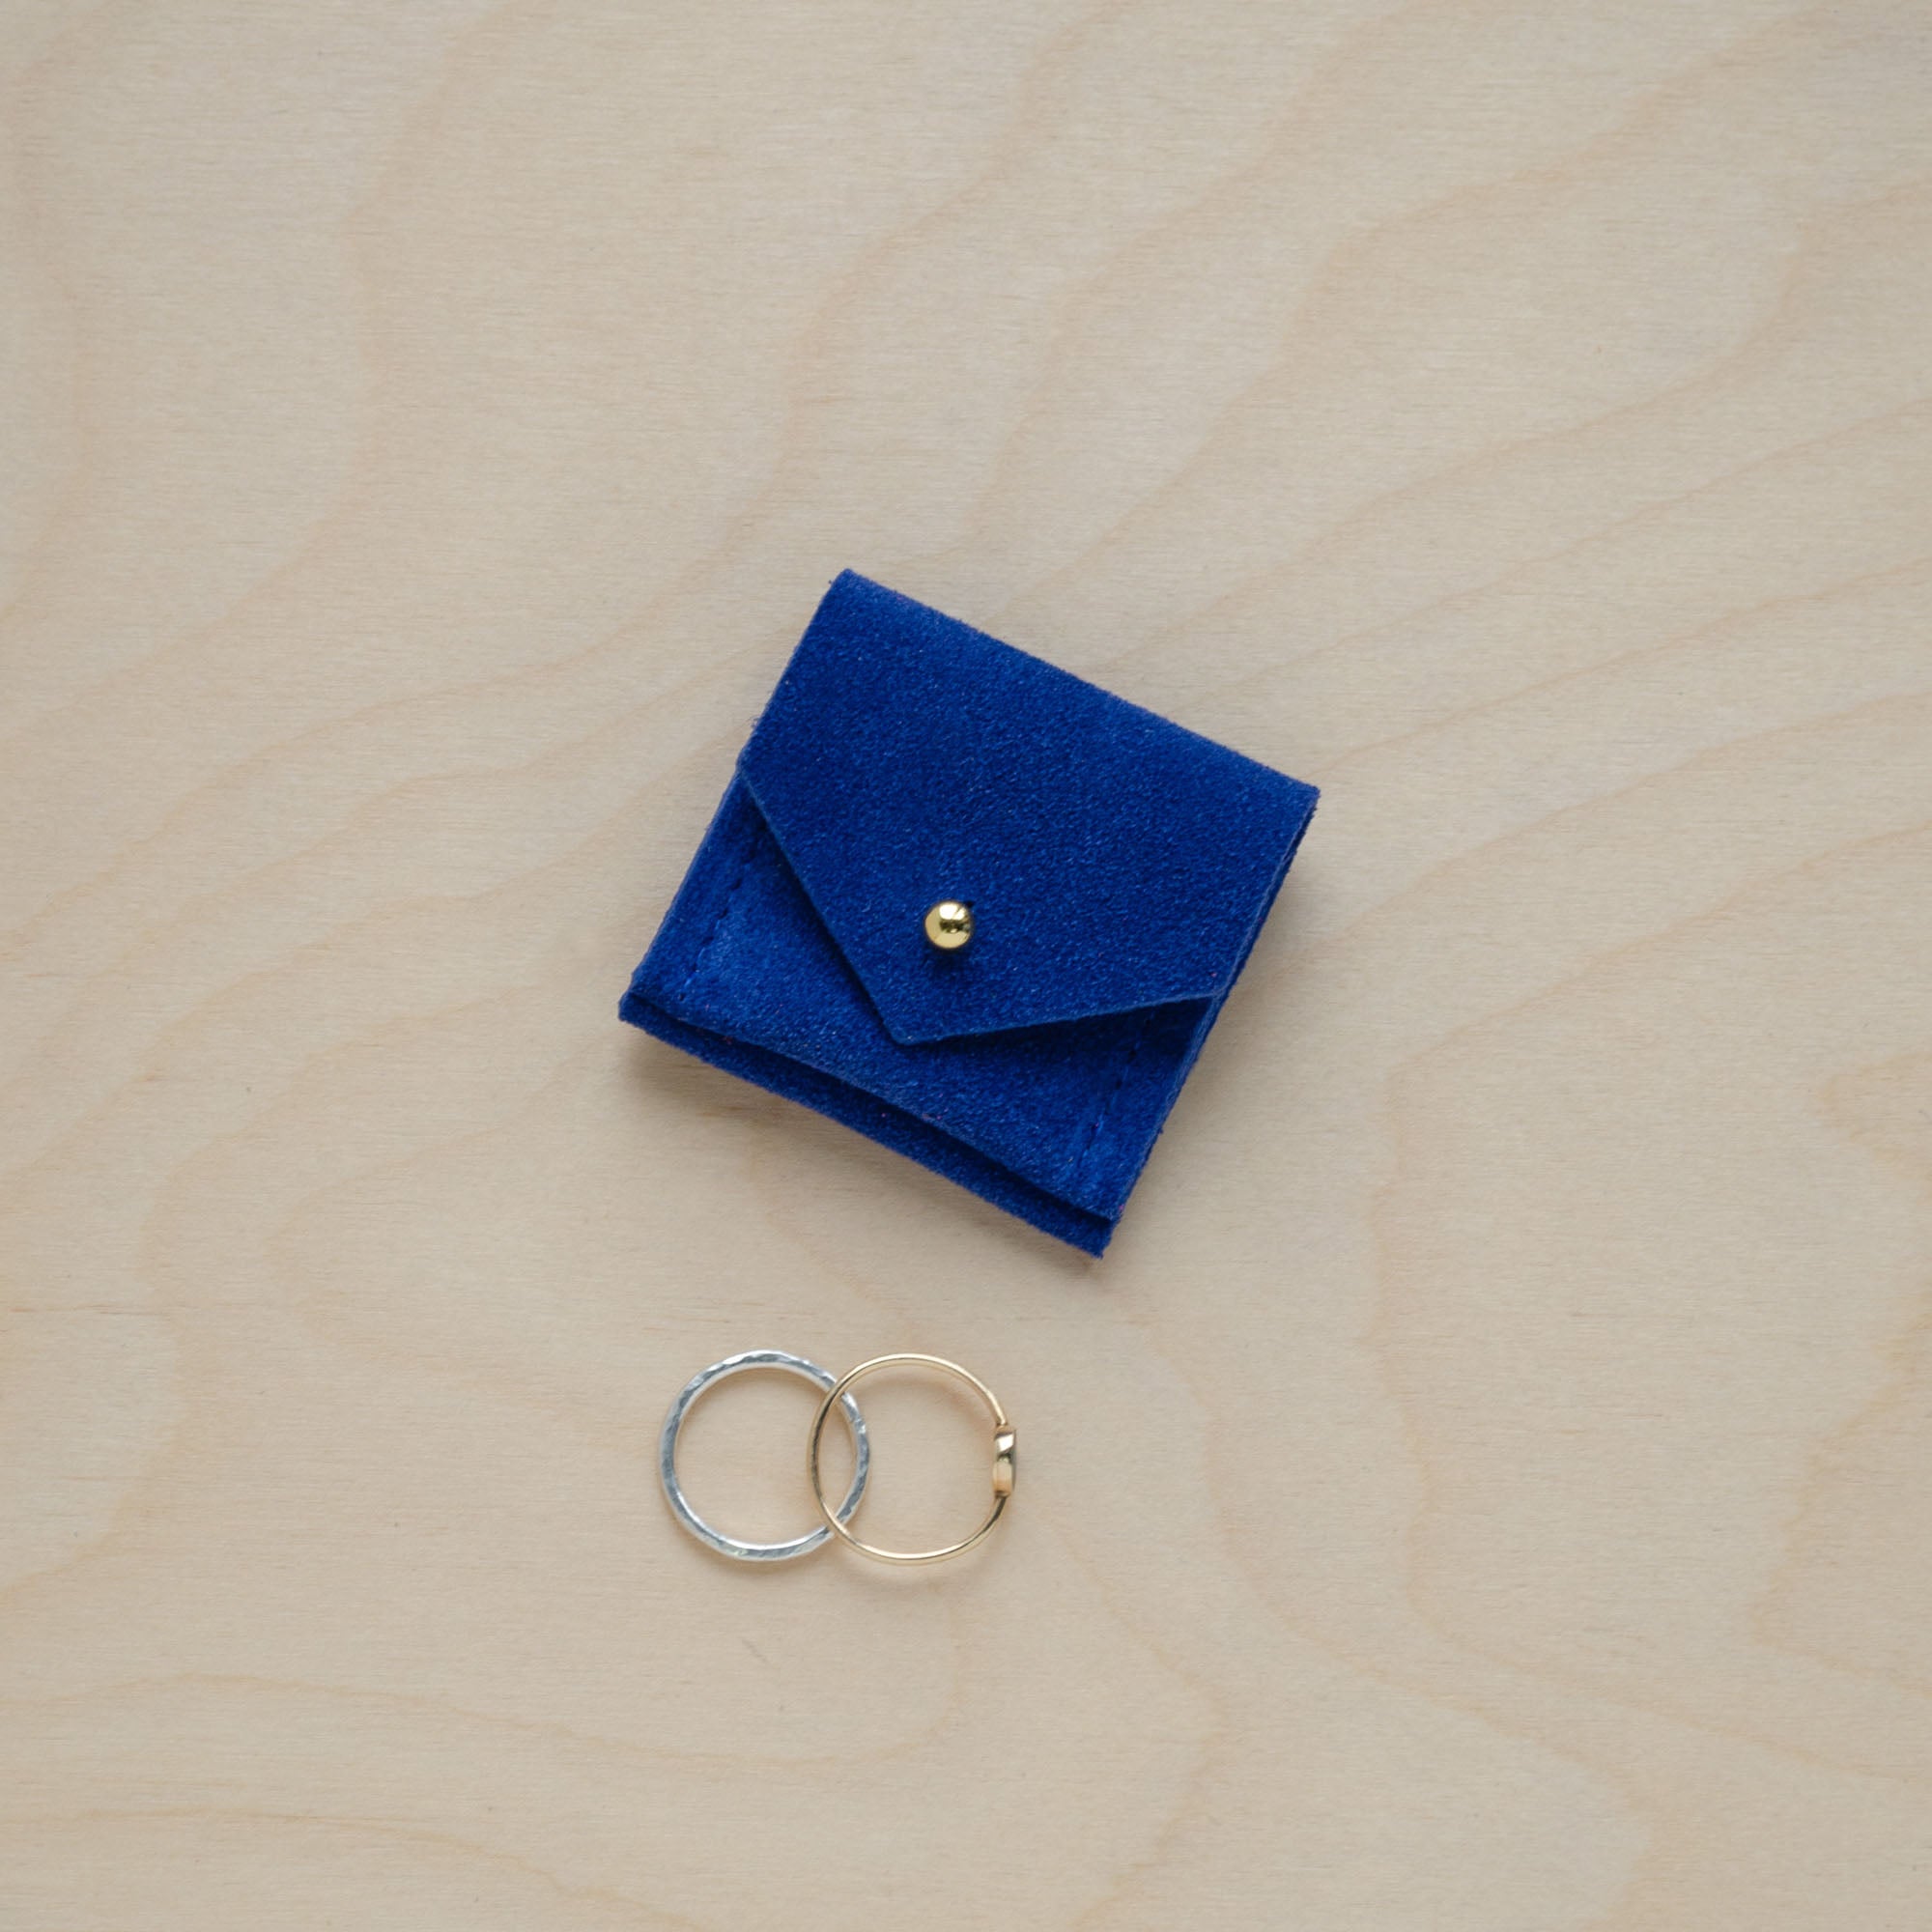 Ultramarine Blue Wedding Ring Pouch in suede.